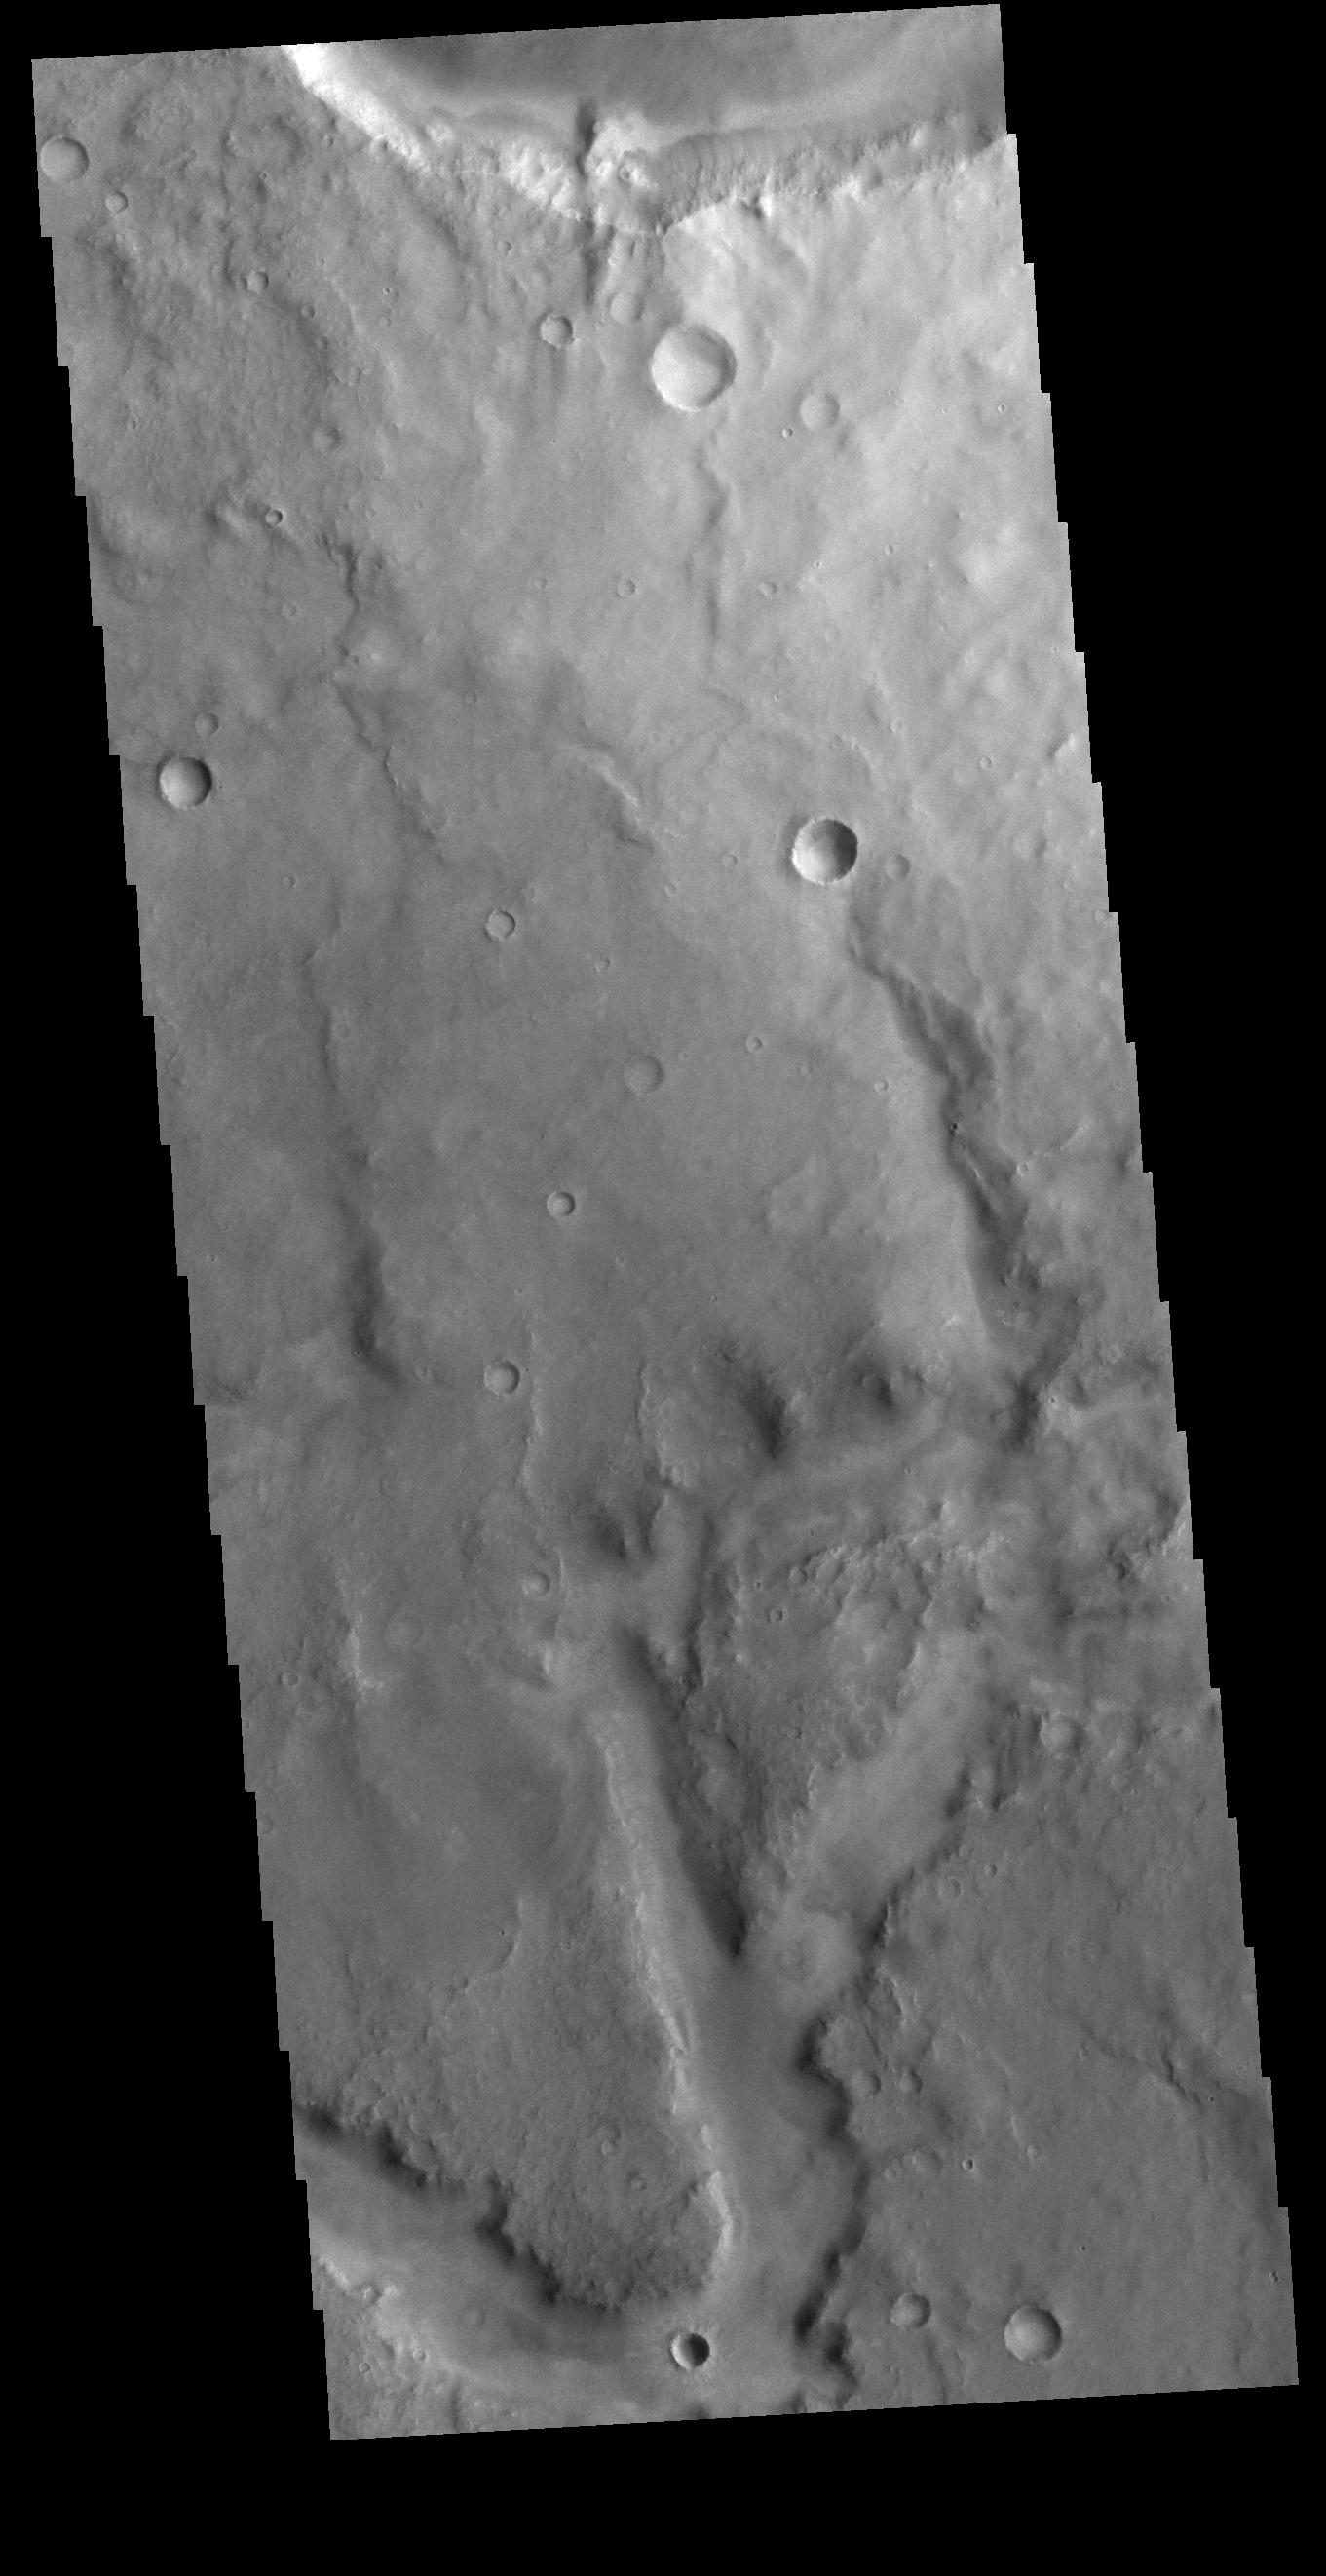 PIA23926: Arabia Terra Channel